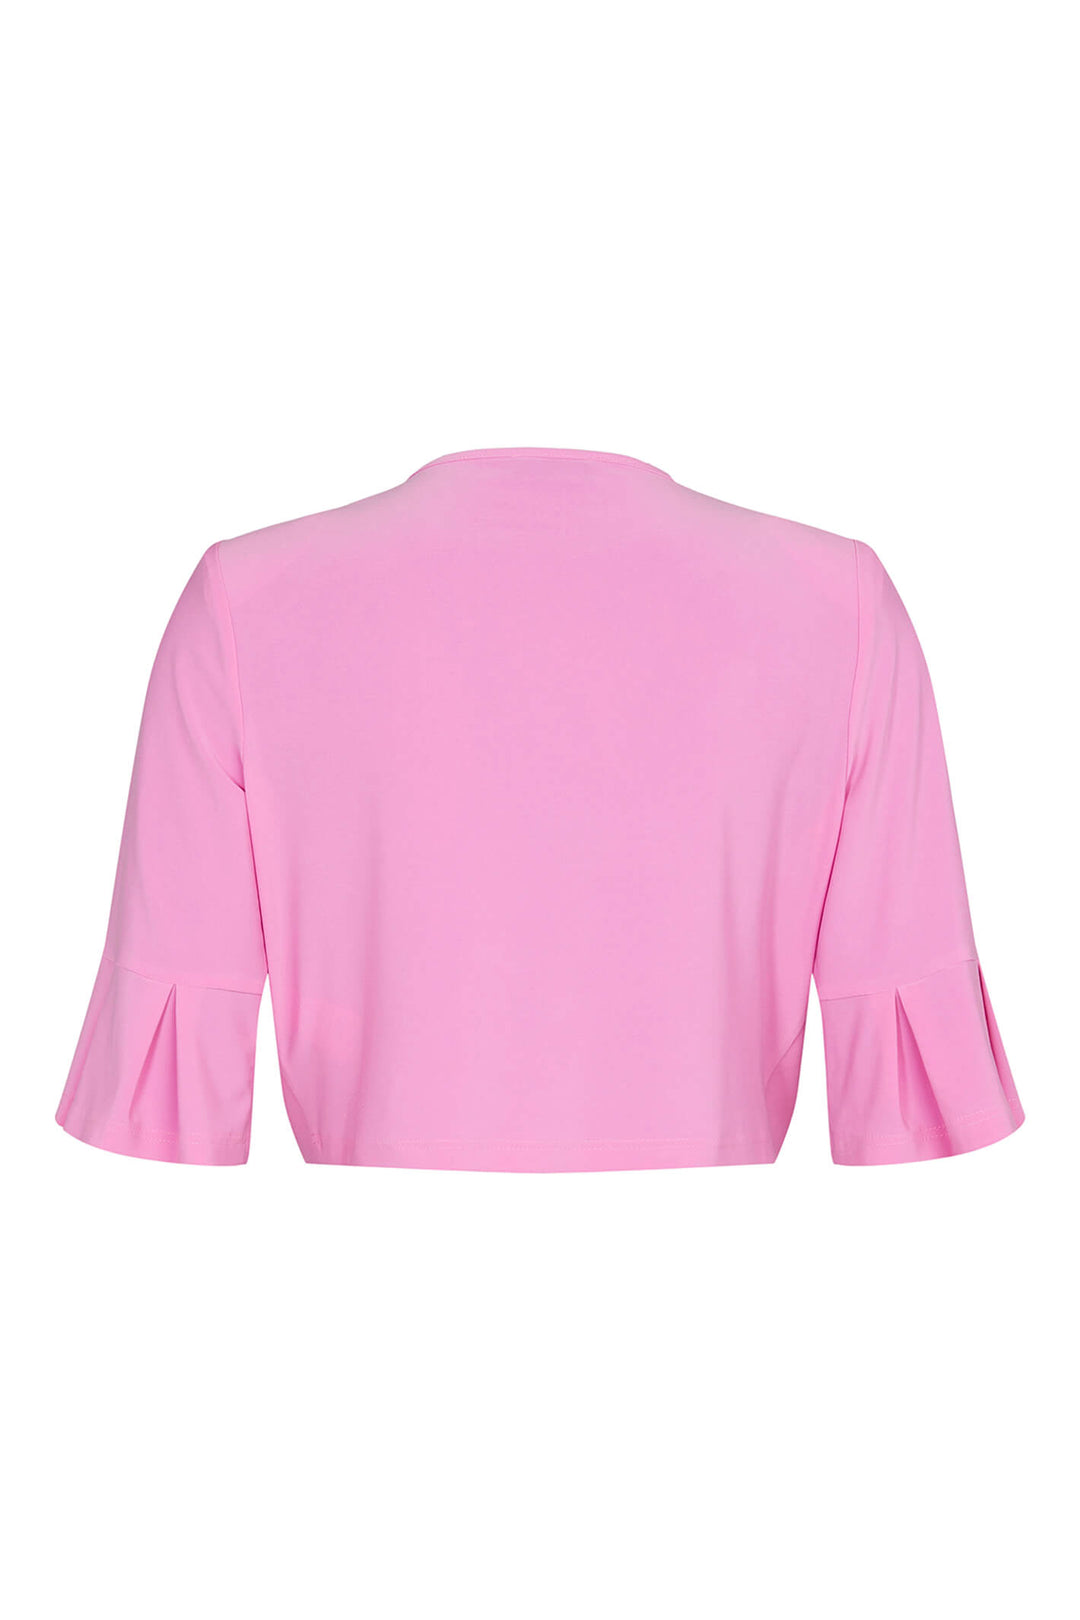 Tia 77565 Orchid Pink Bolero Jacket - Experience Boutique